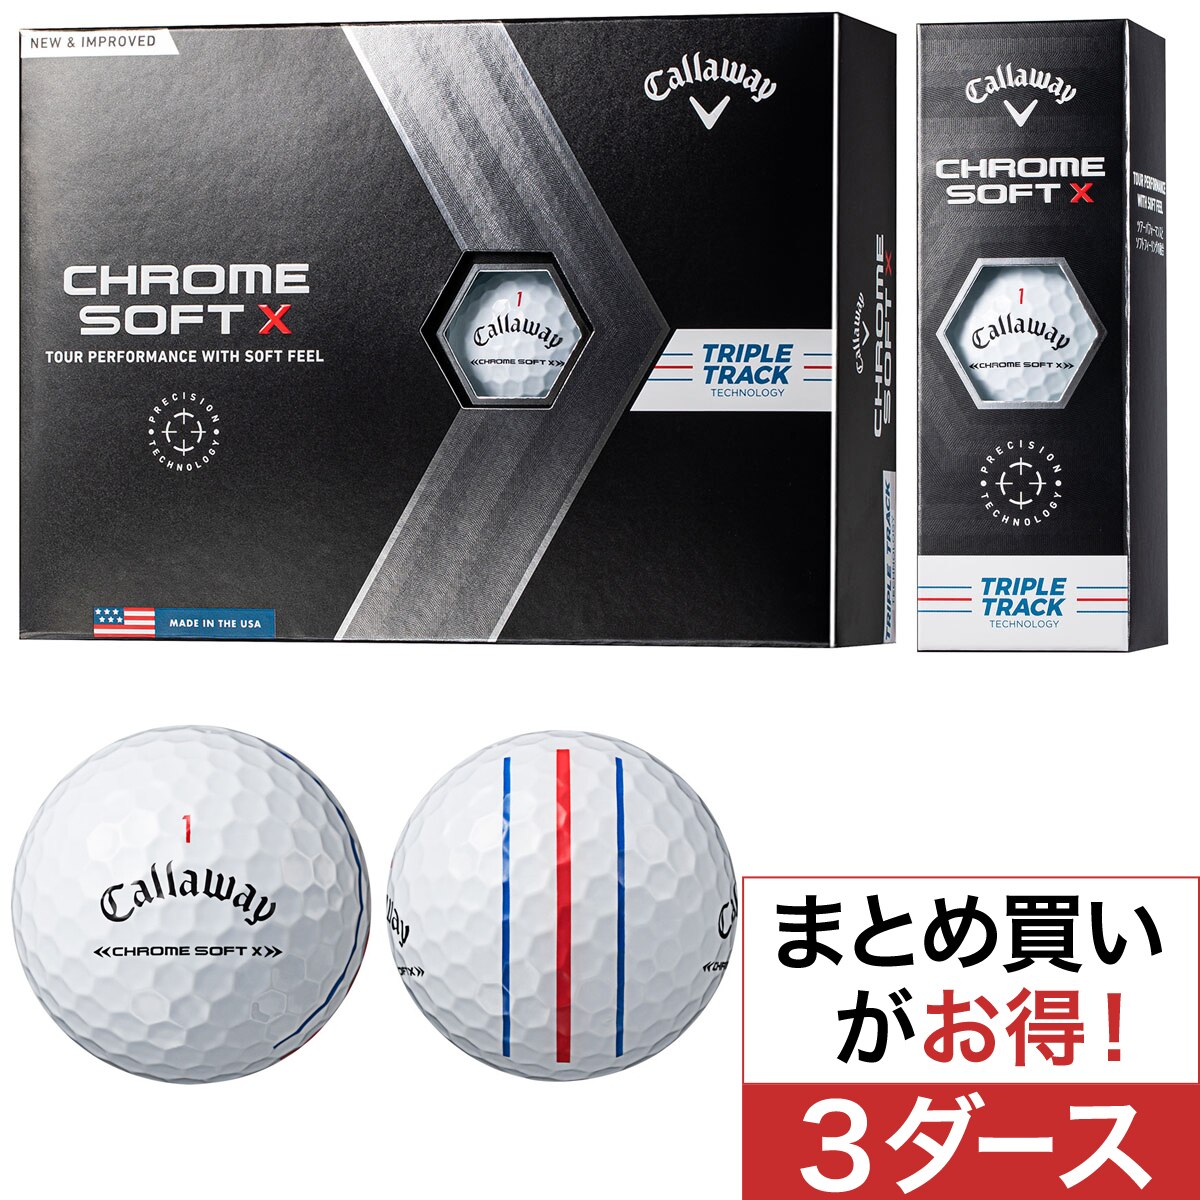 CHROME SOFT X TRIPLE TRACK ボール 3ダースセット(ゴルフボール)